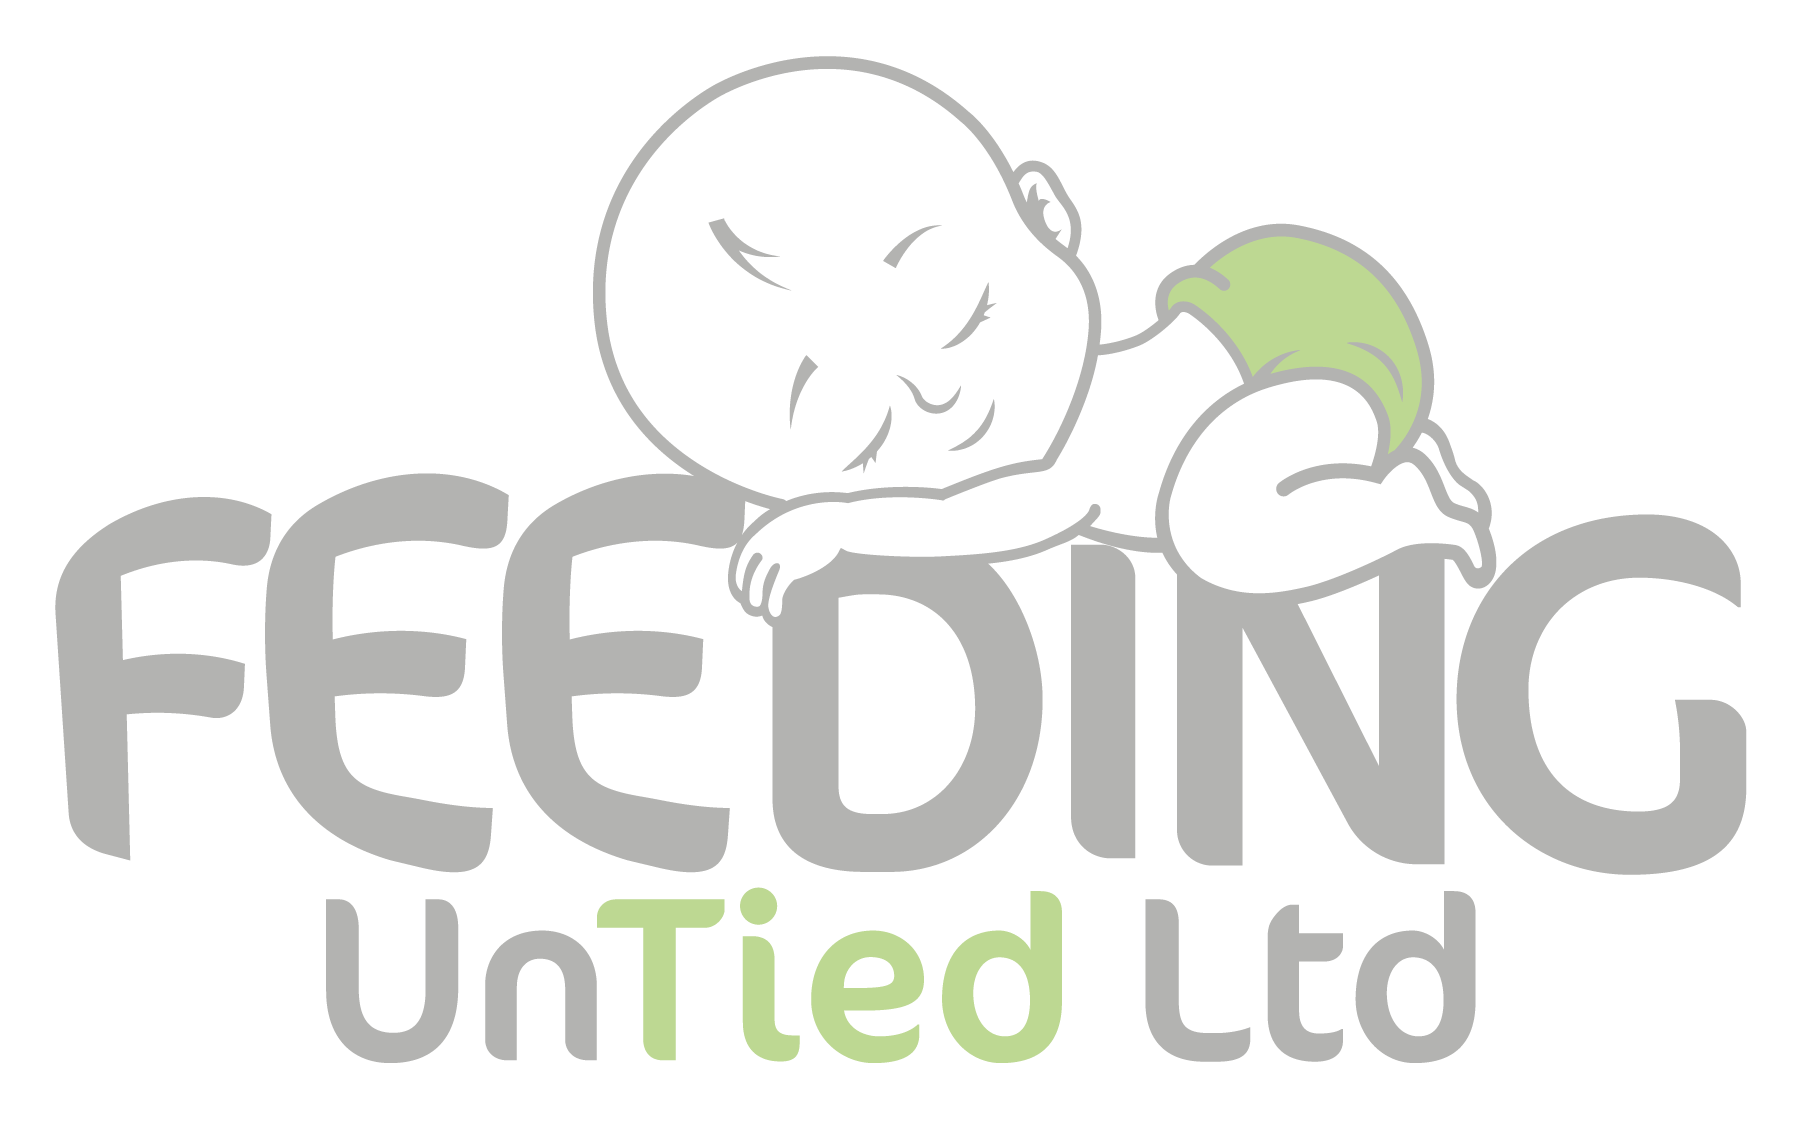 Feeding UnTied Limited's logo